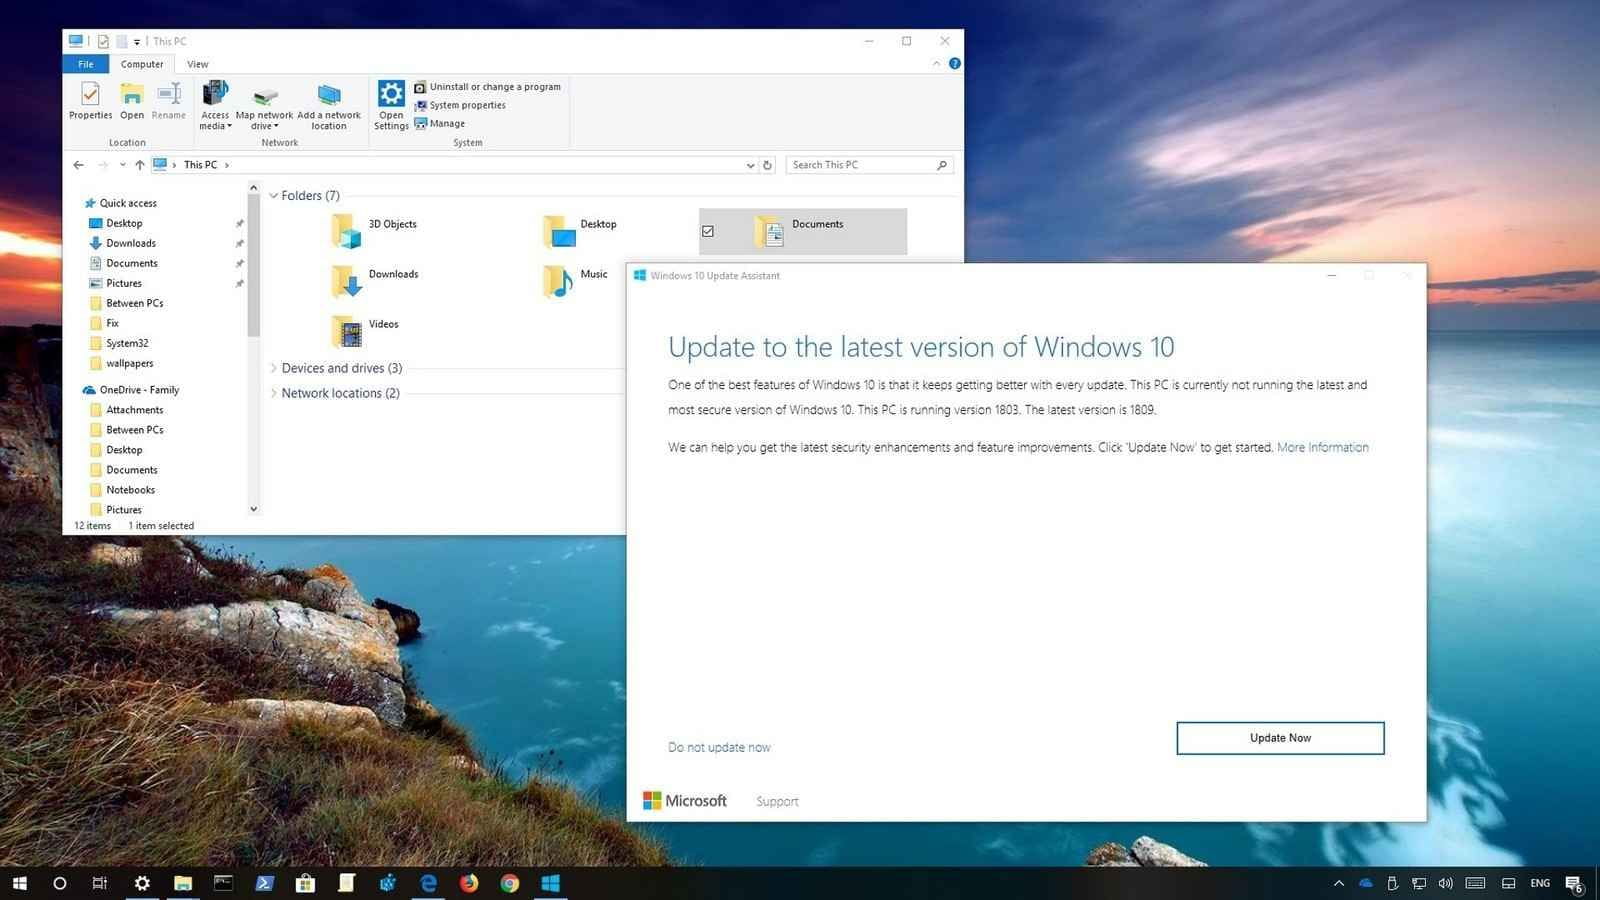 Microsoft membujuk pengguna mengupdate Windows mereka